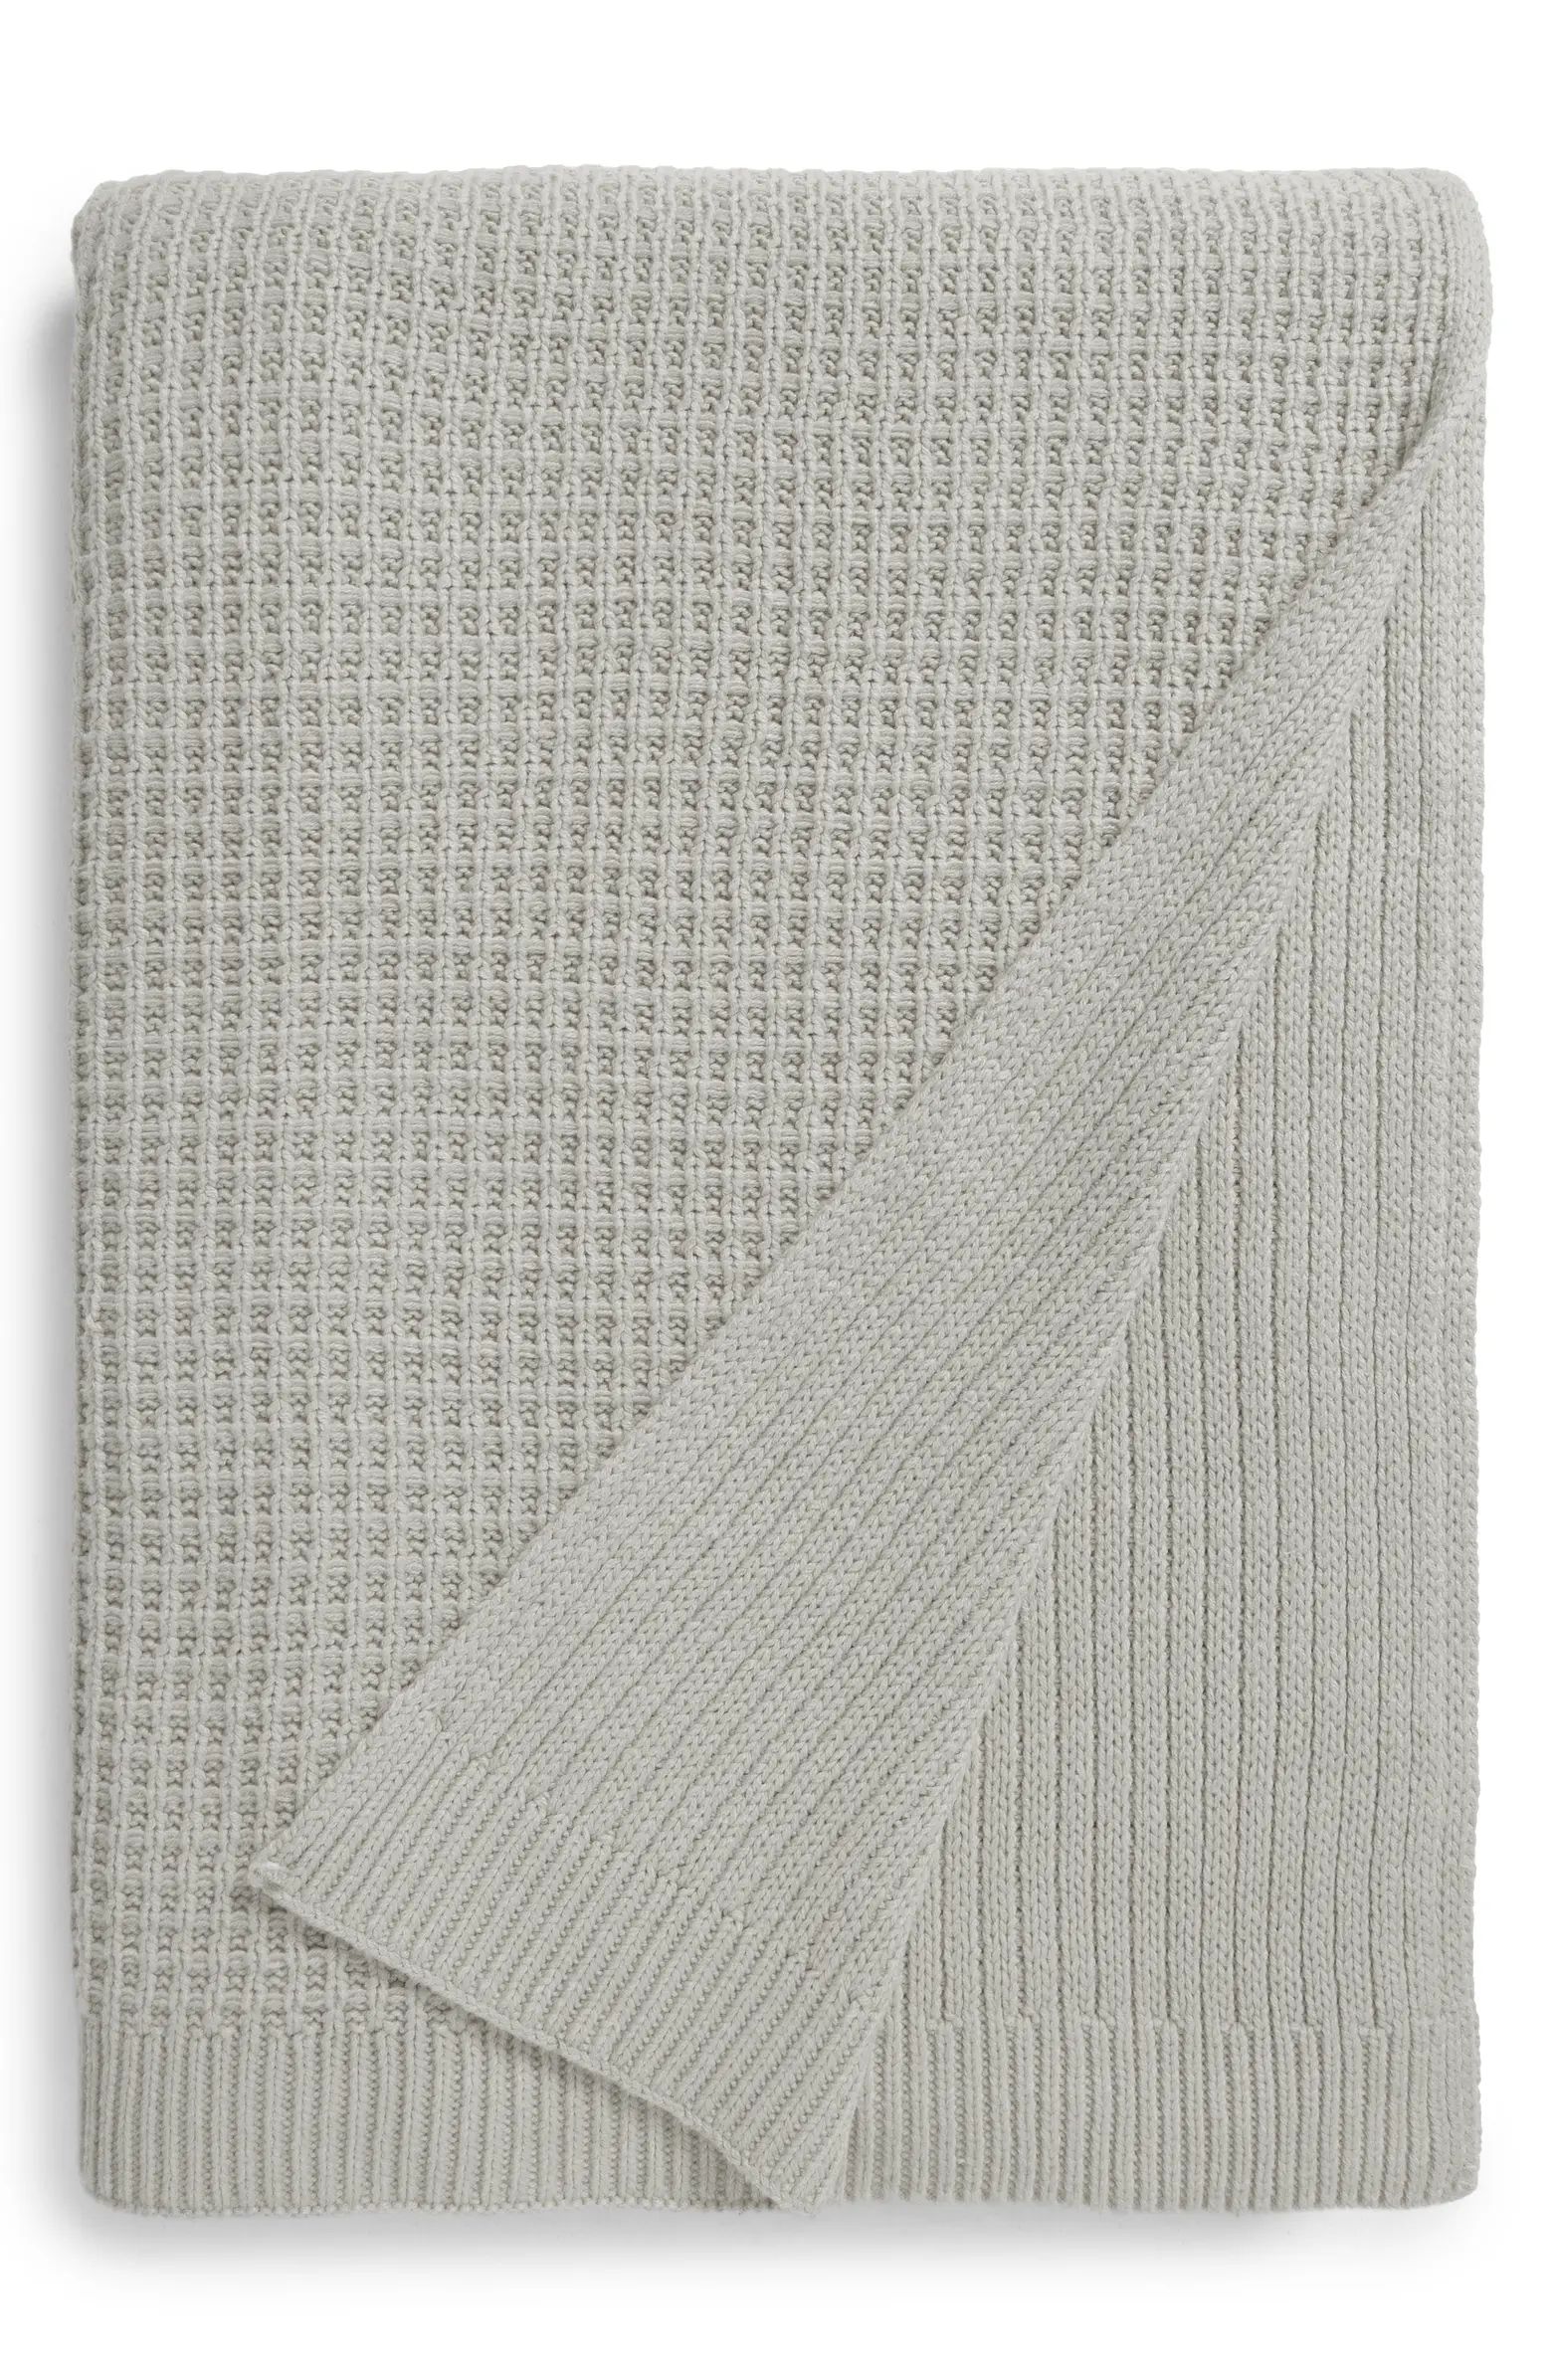 Reversible Knit Blanket | Nordstrom